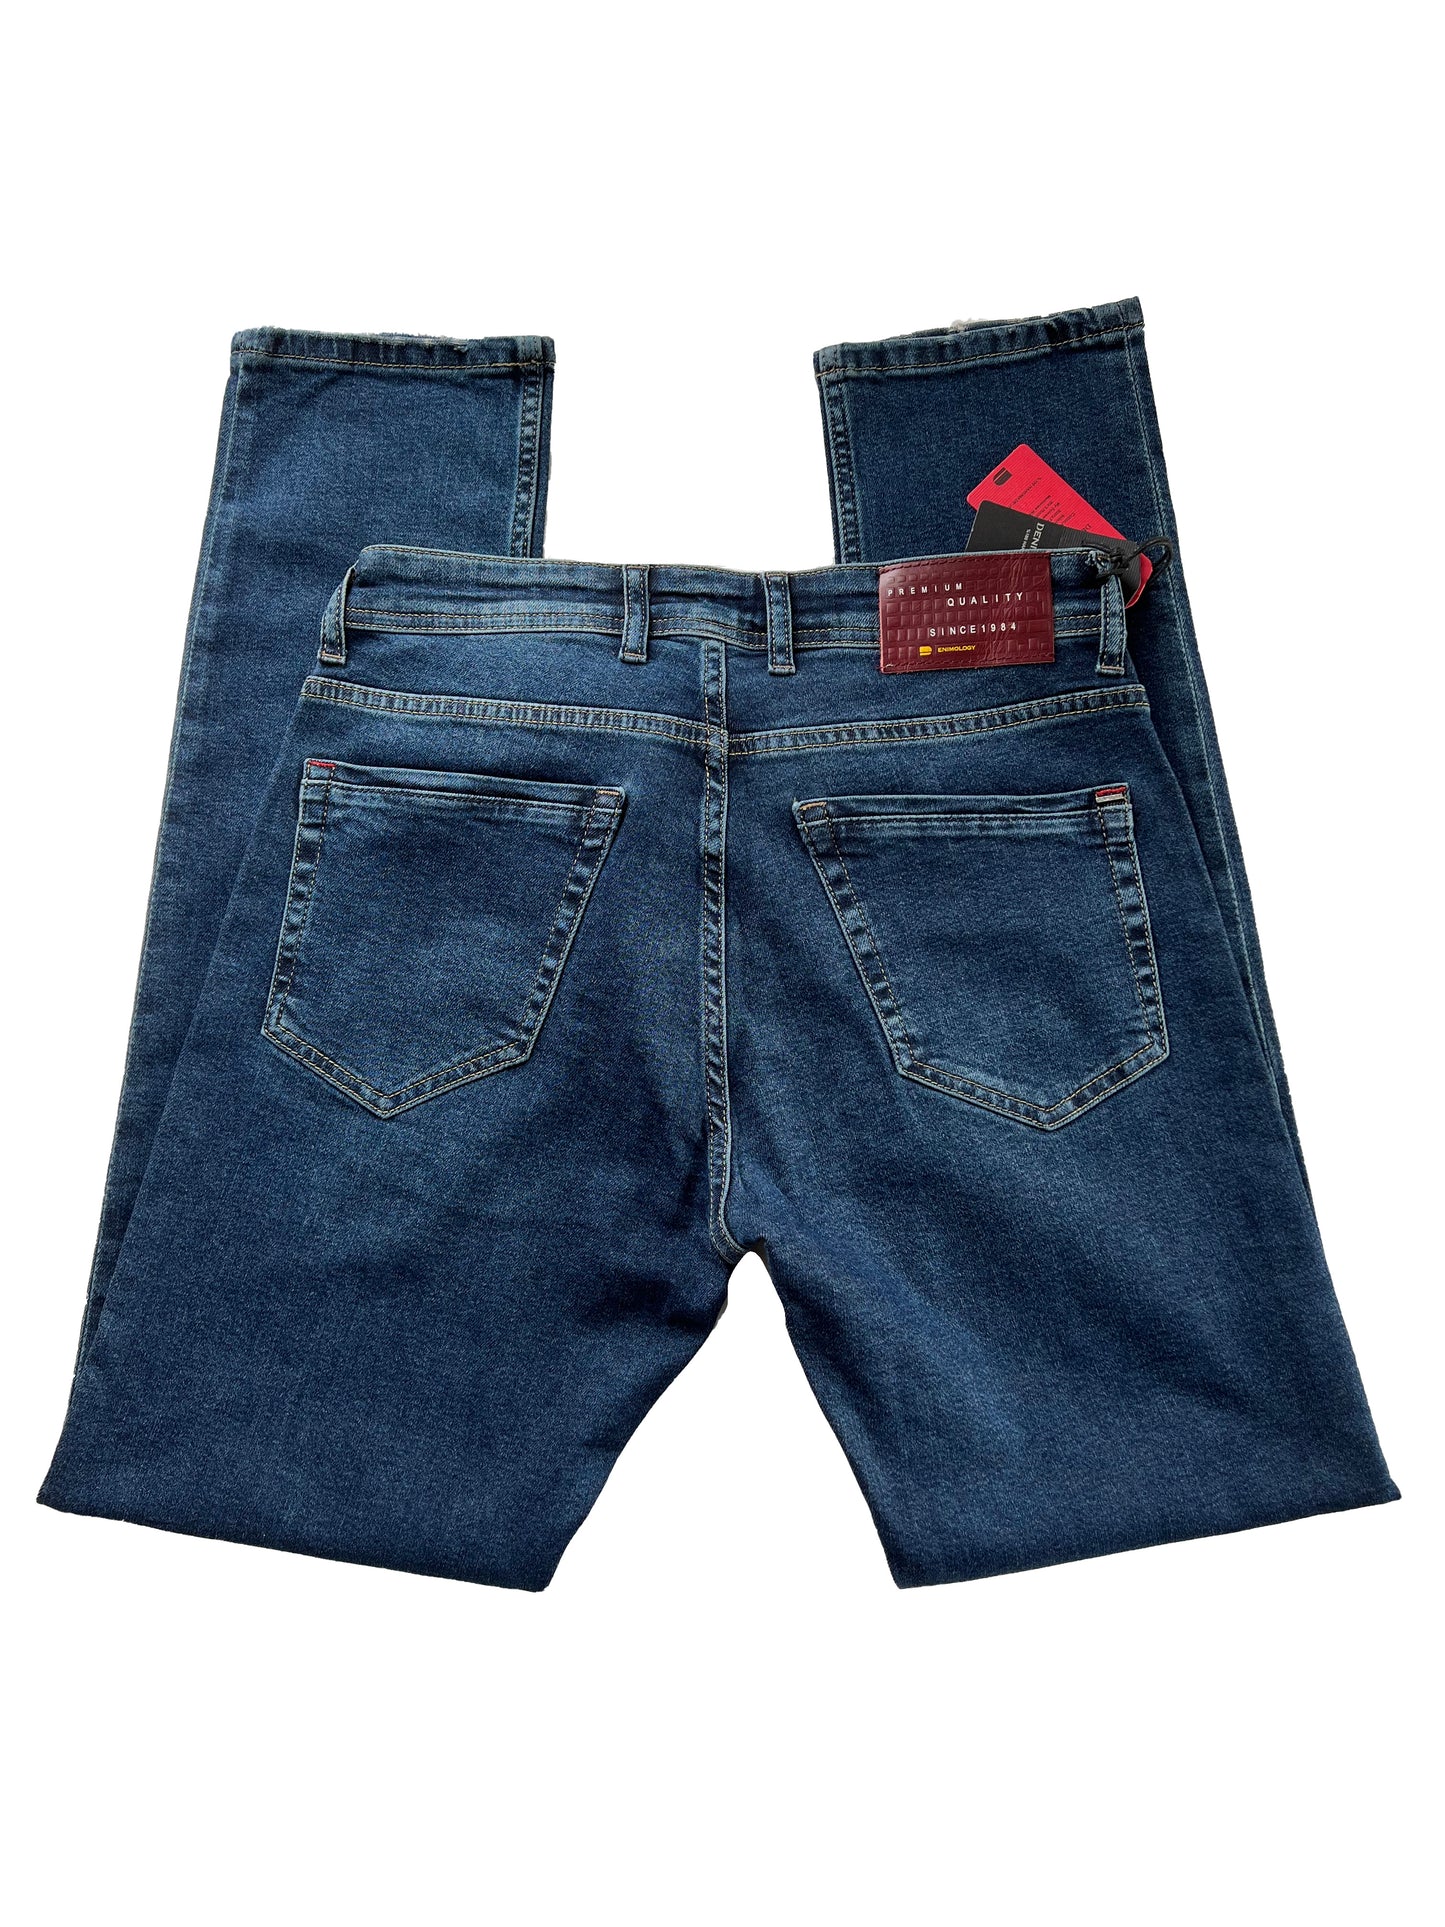 Men's Slim Fit Comfortable Jeans, Trousers- Chorley